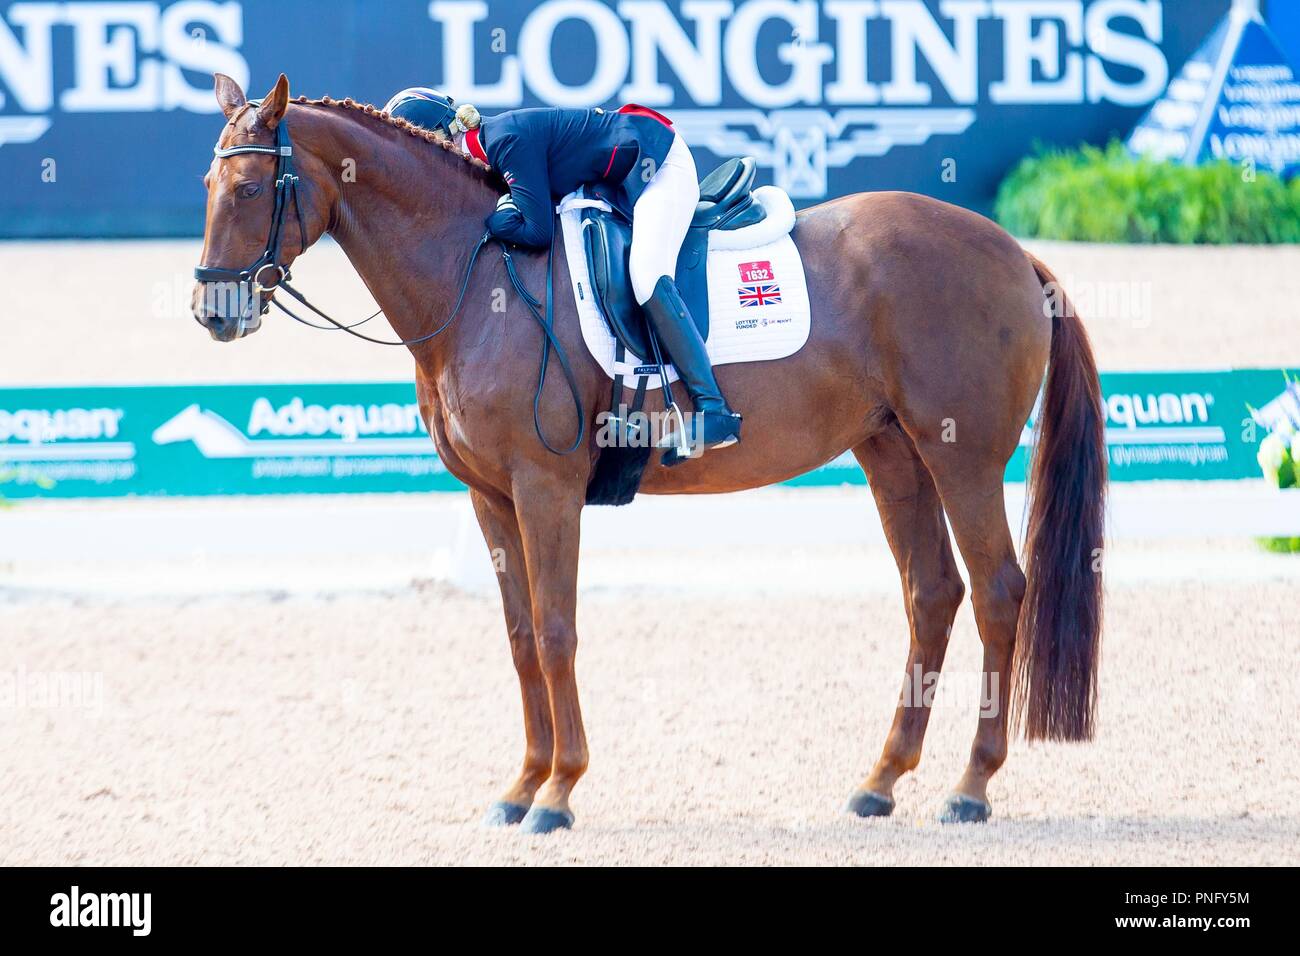 7th Place. Erin Frances Orford riding Dior. GBR. Team Test Grade lll.Para Dressage. Day 10. World Equestrian Games. WEG 2018 Tryon. North Carolina. USA. 21/09/2018. Stock Photo